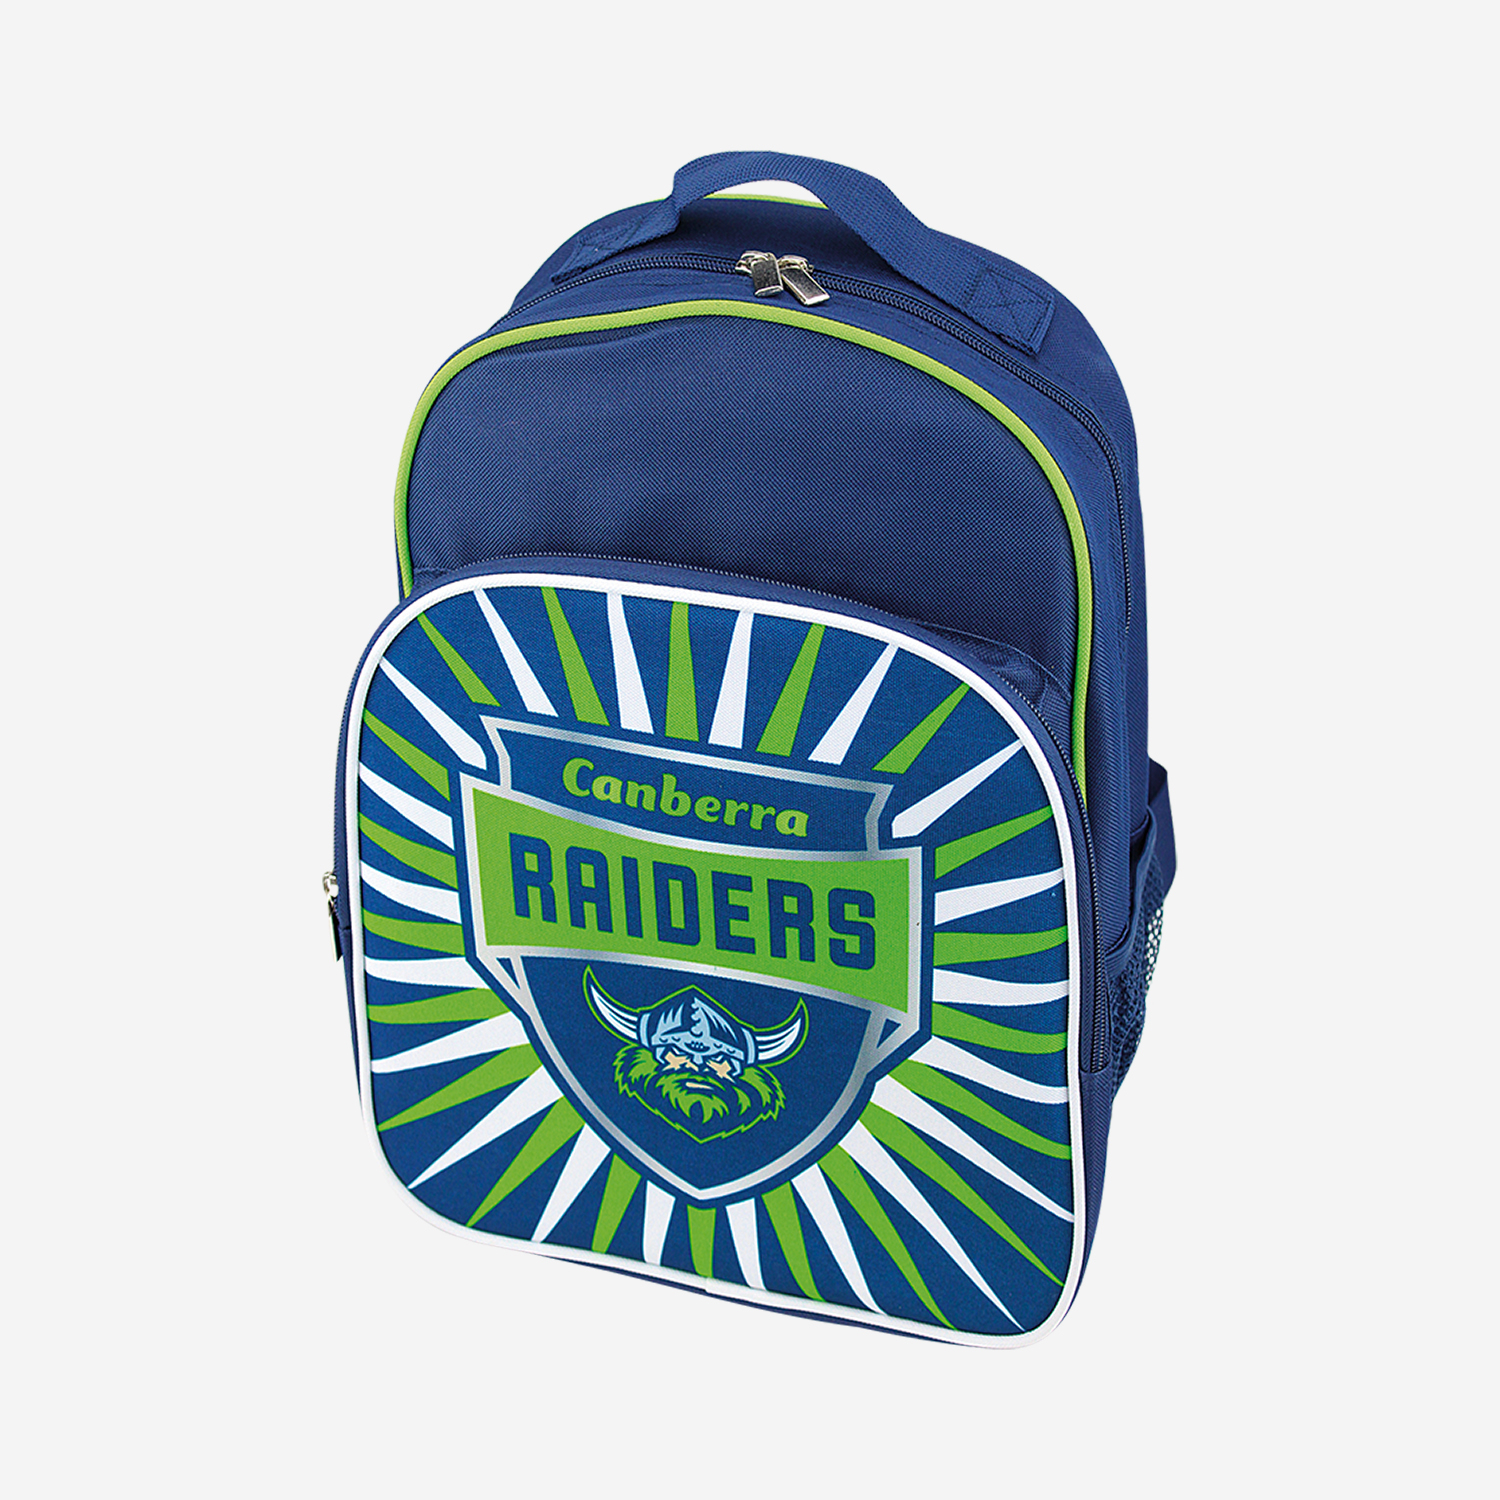 Raiders NRL Backpack